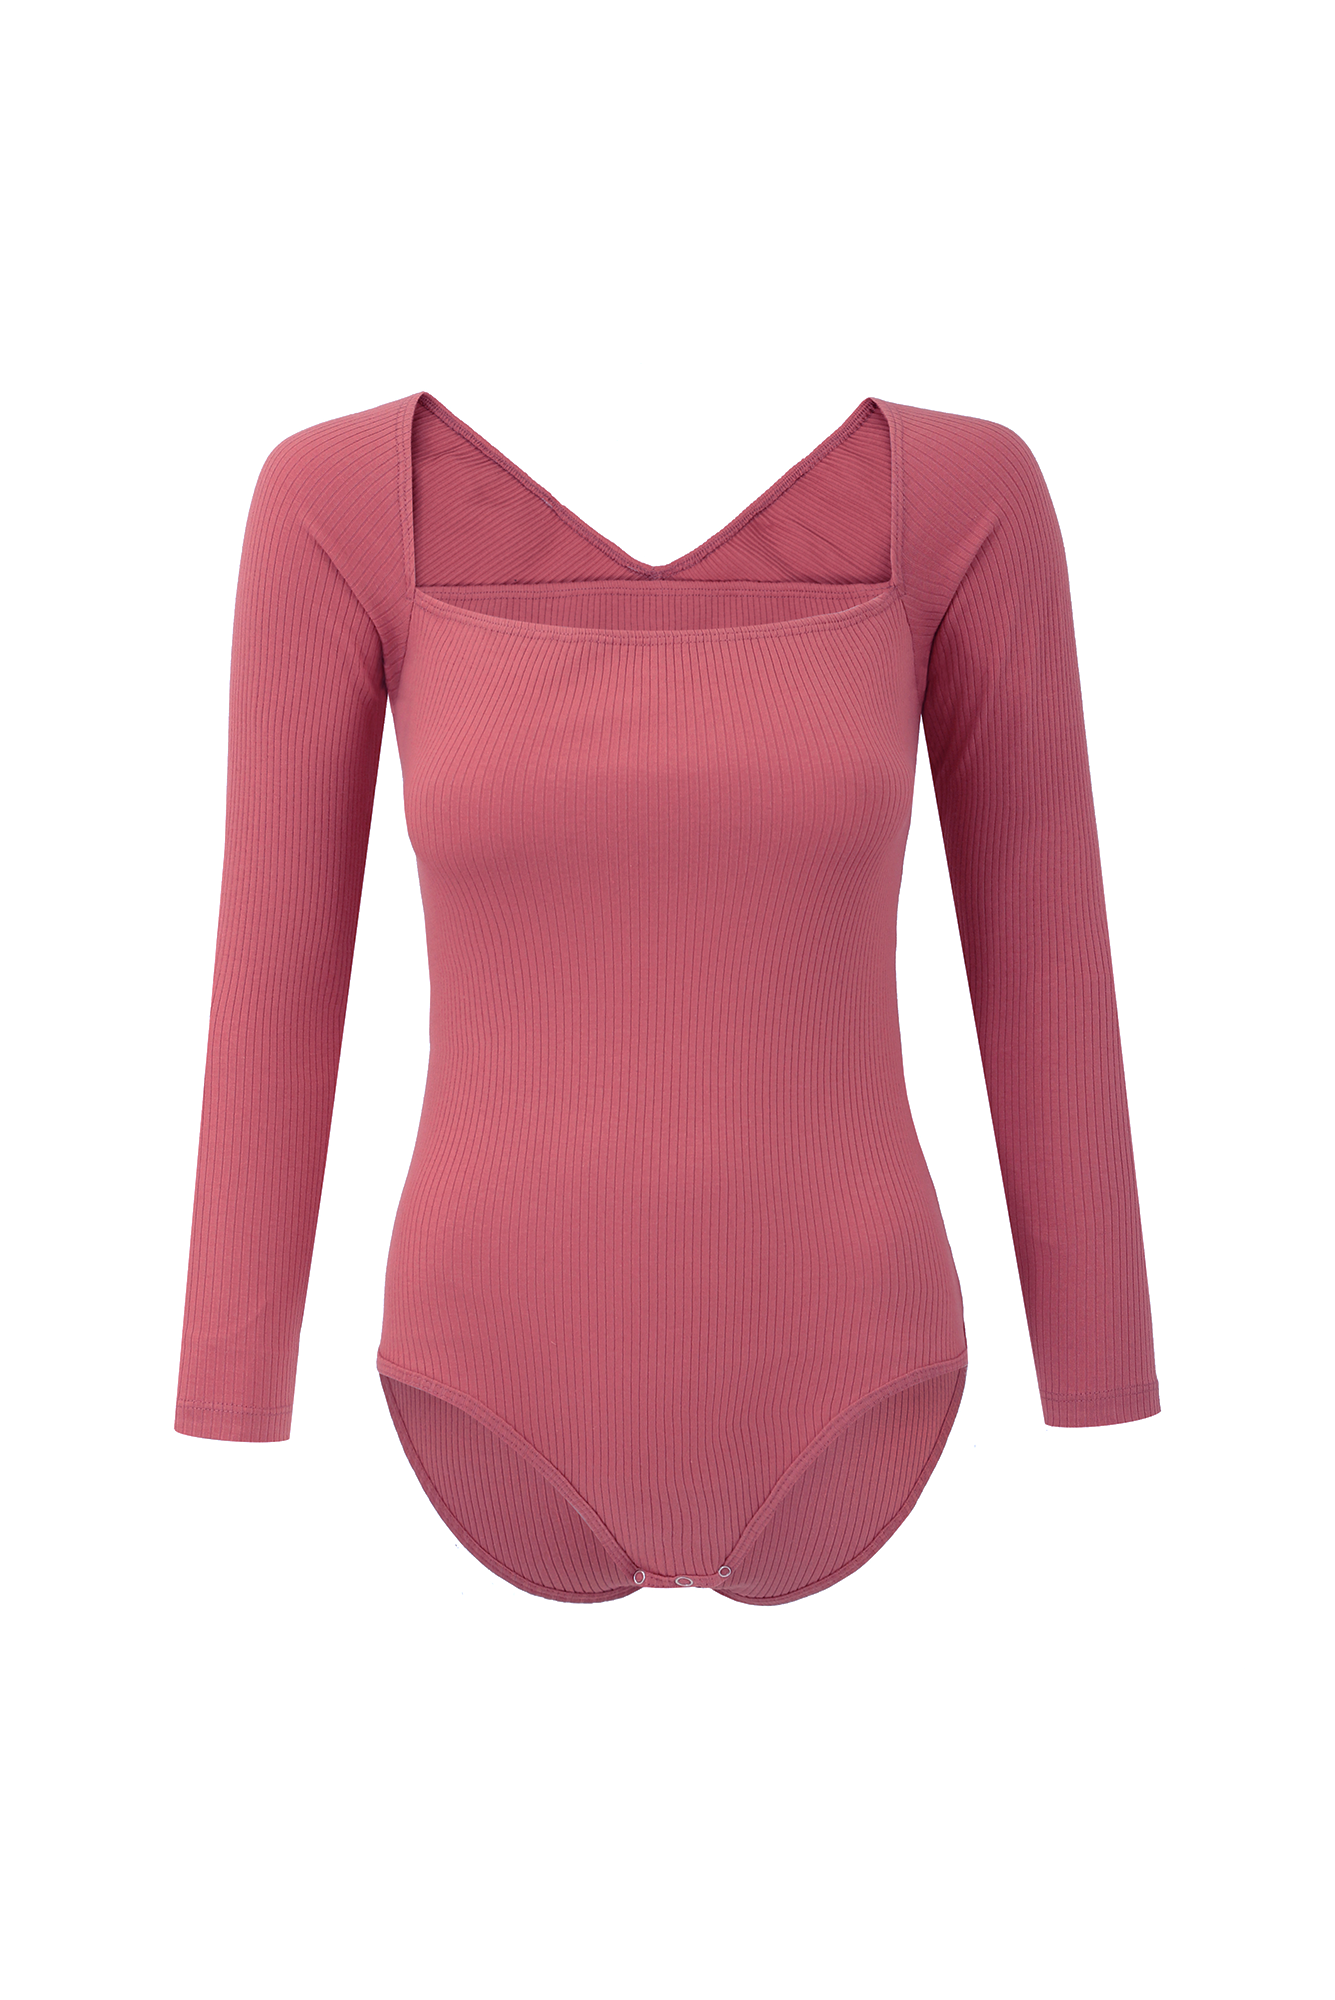 Bodysuit in organic cotton / 01 / 03 / raspberry pink